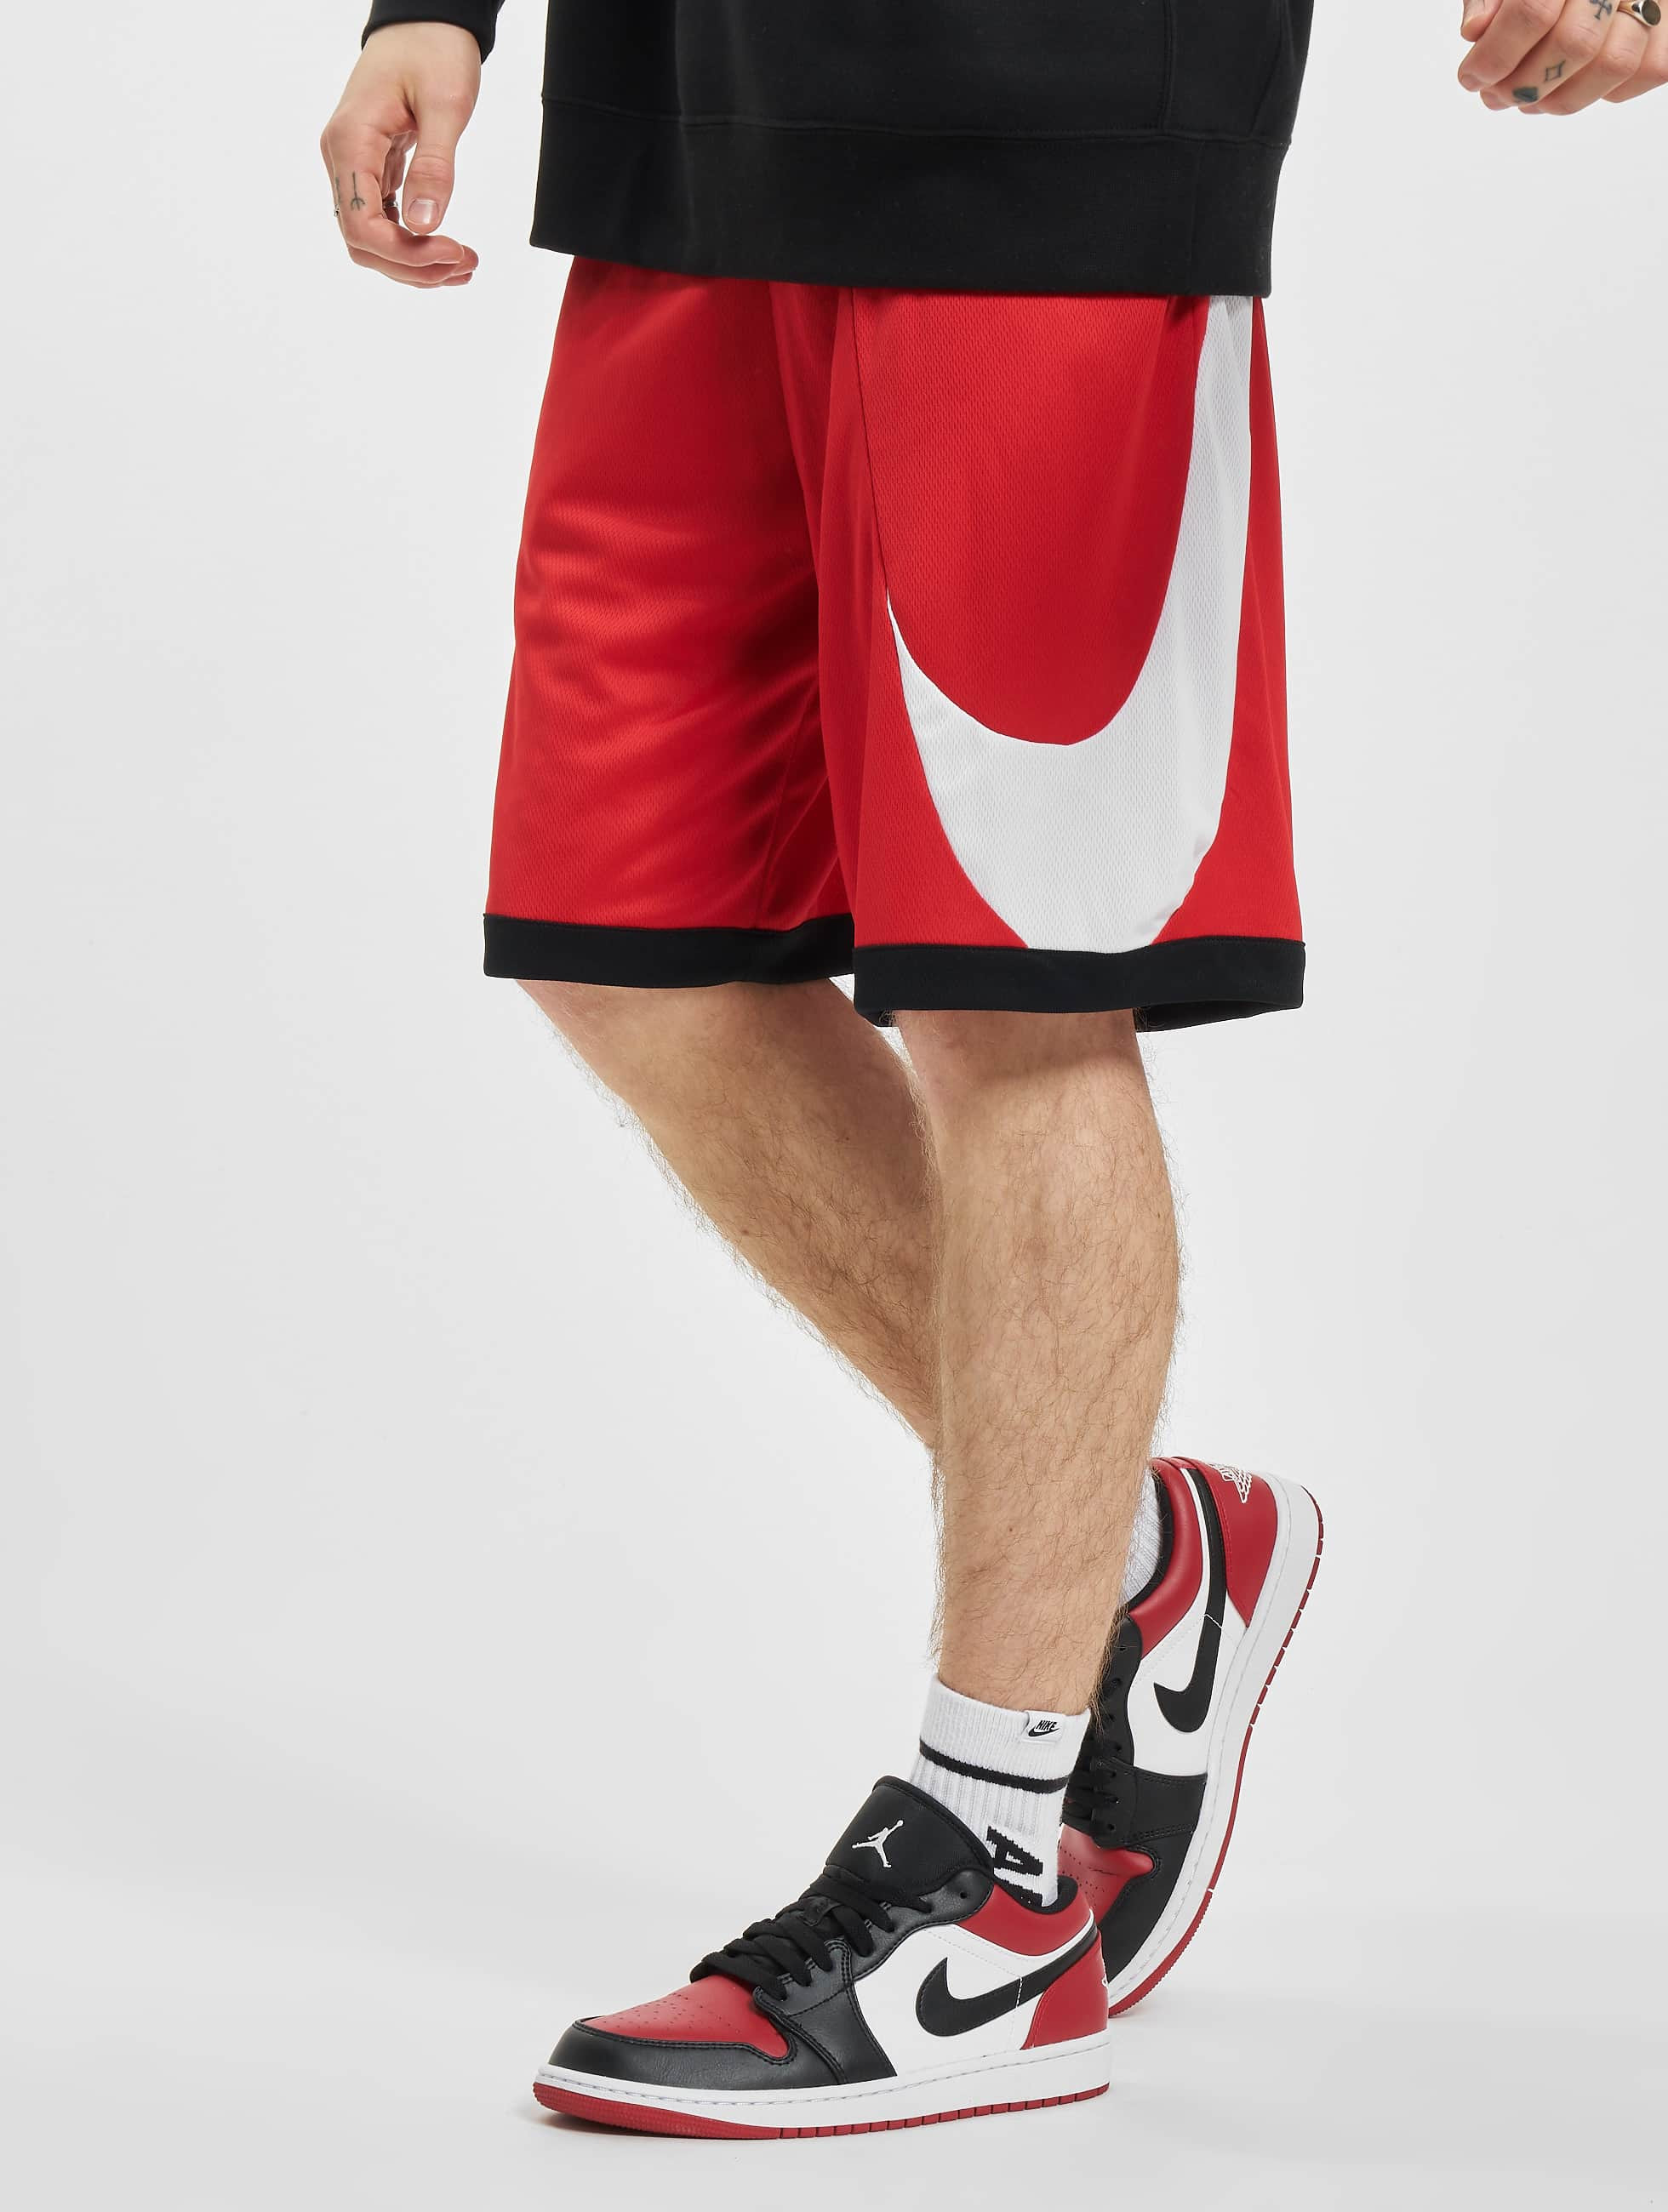 Pantalón cortos Hbr 3.0 Jordan rojo 979613